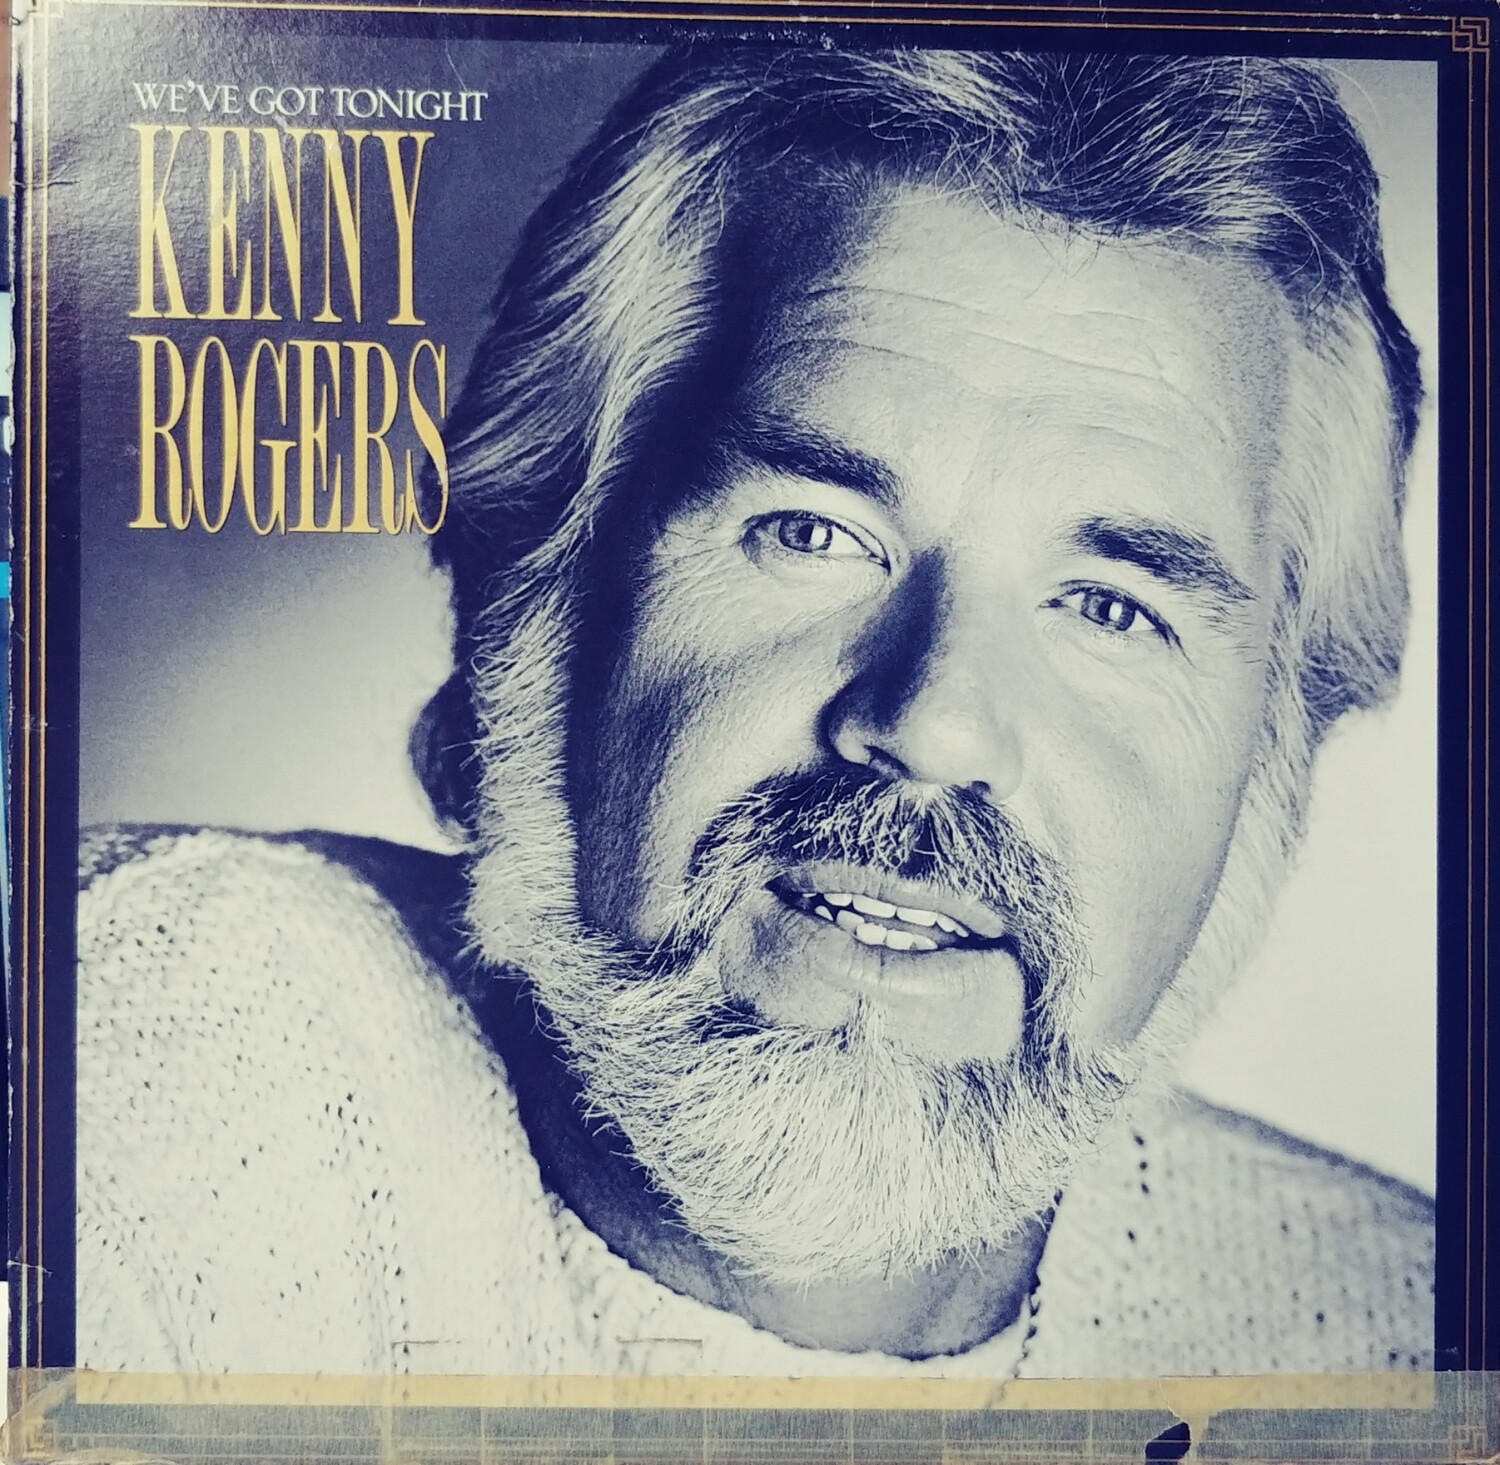 Kenny Rogers - We've got tonight